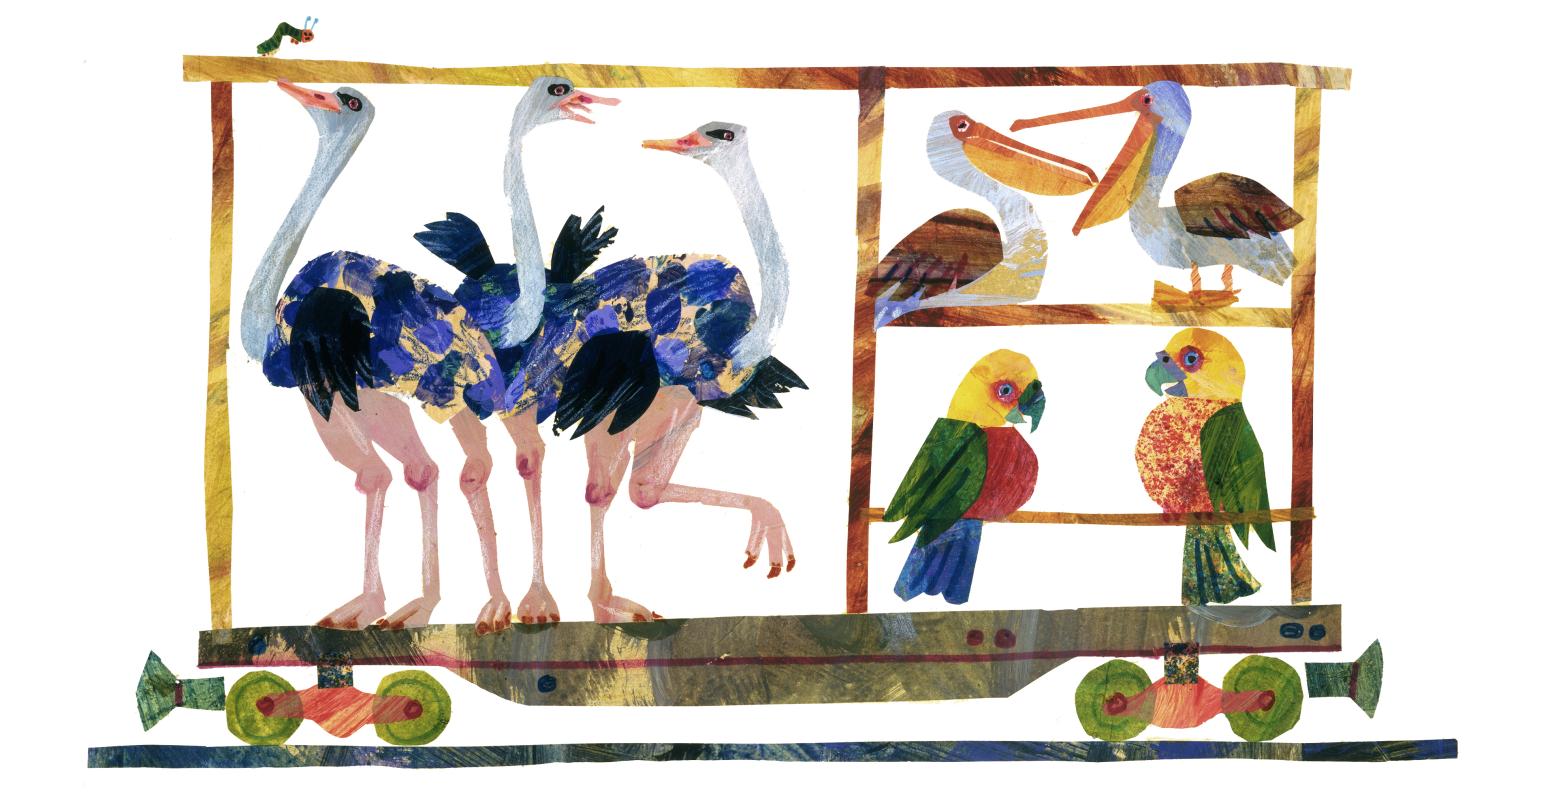 Illustration of birds in train car. 